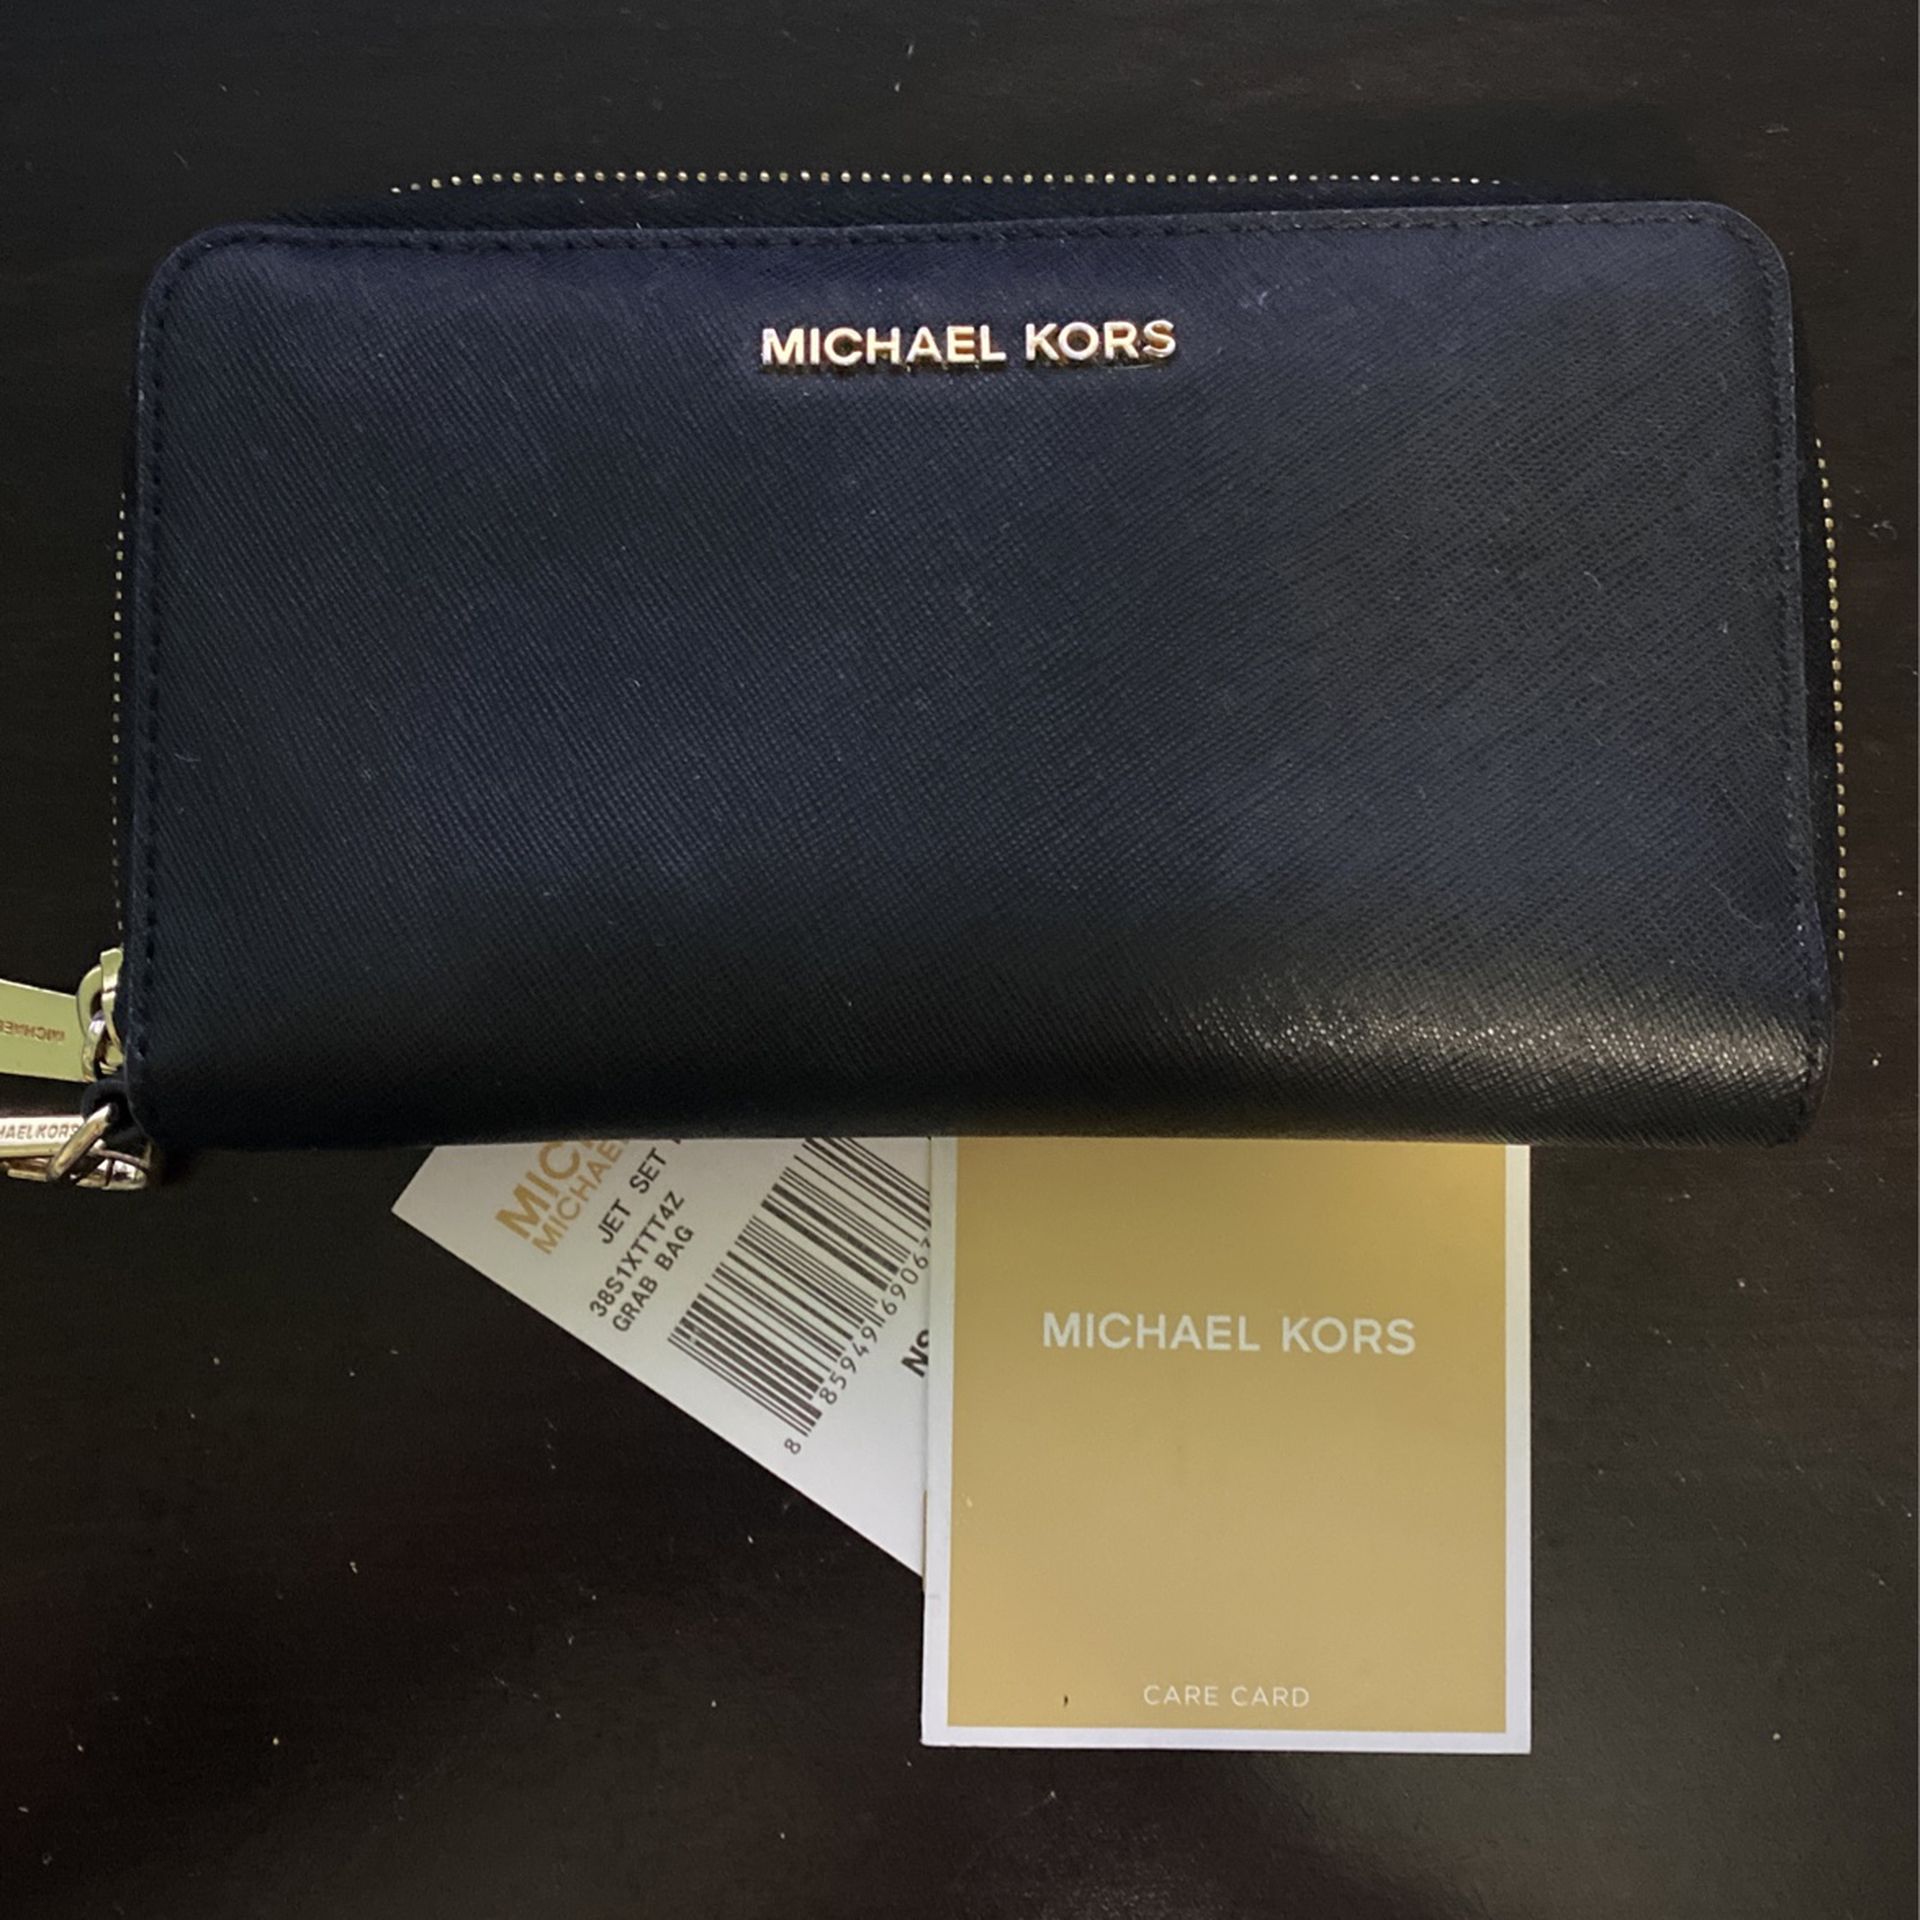 Michael Kors Wristlet Wallet